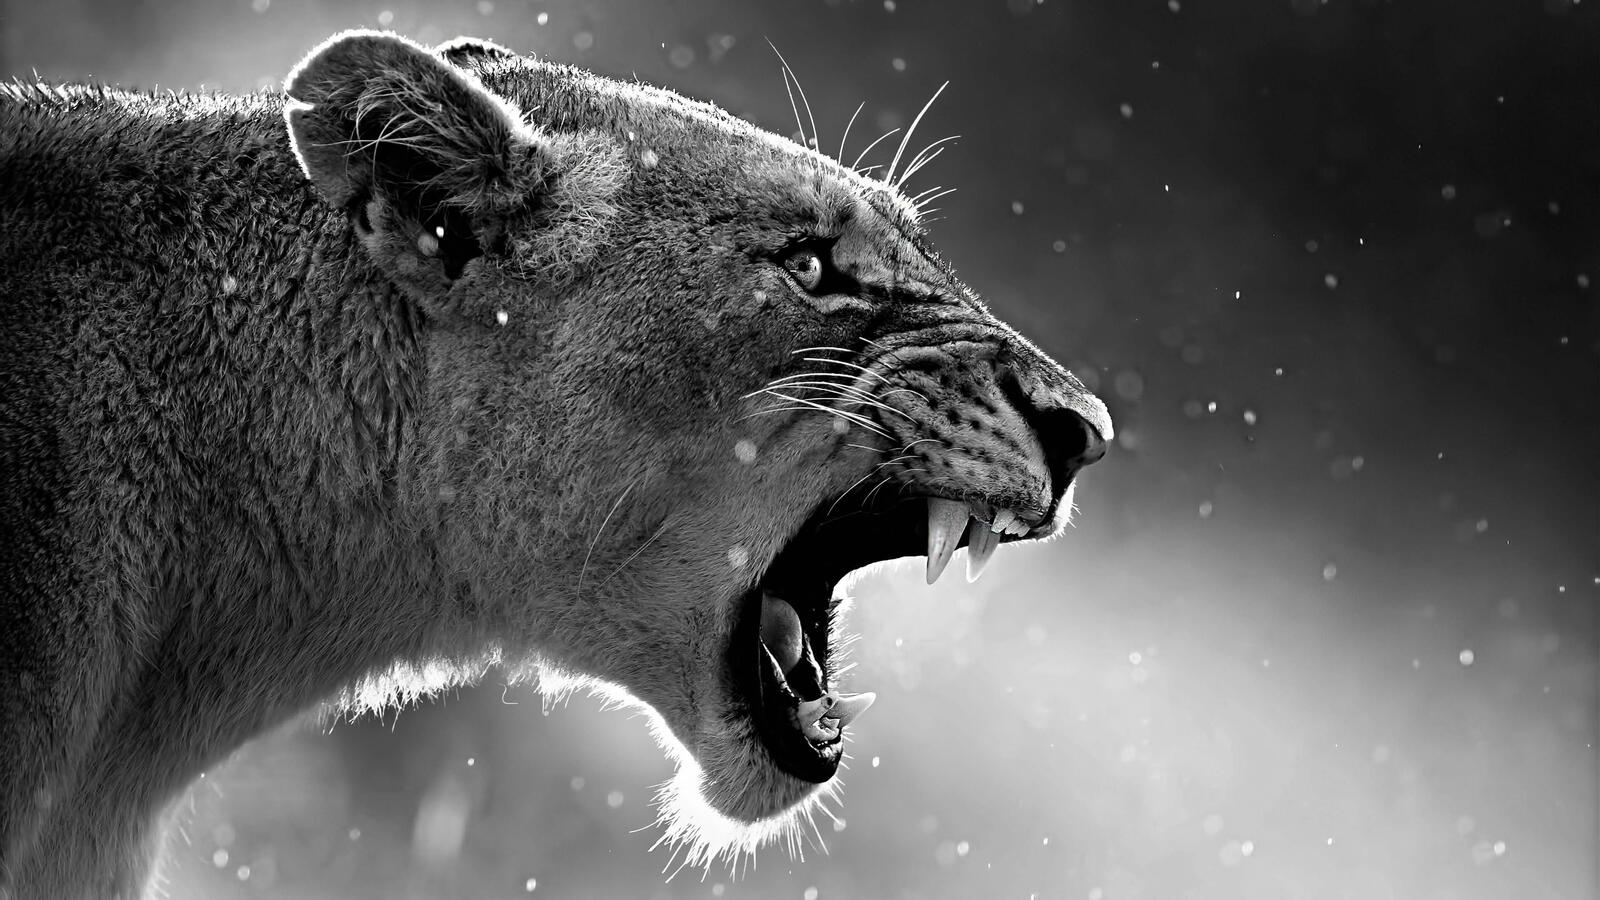 Wallpapers lion animals roar on the desktop